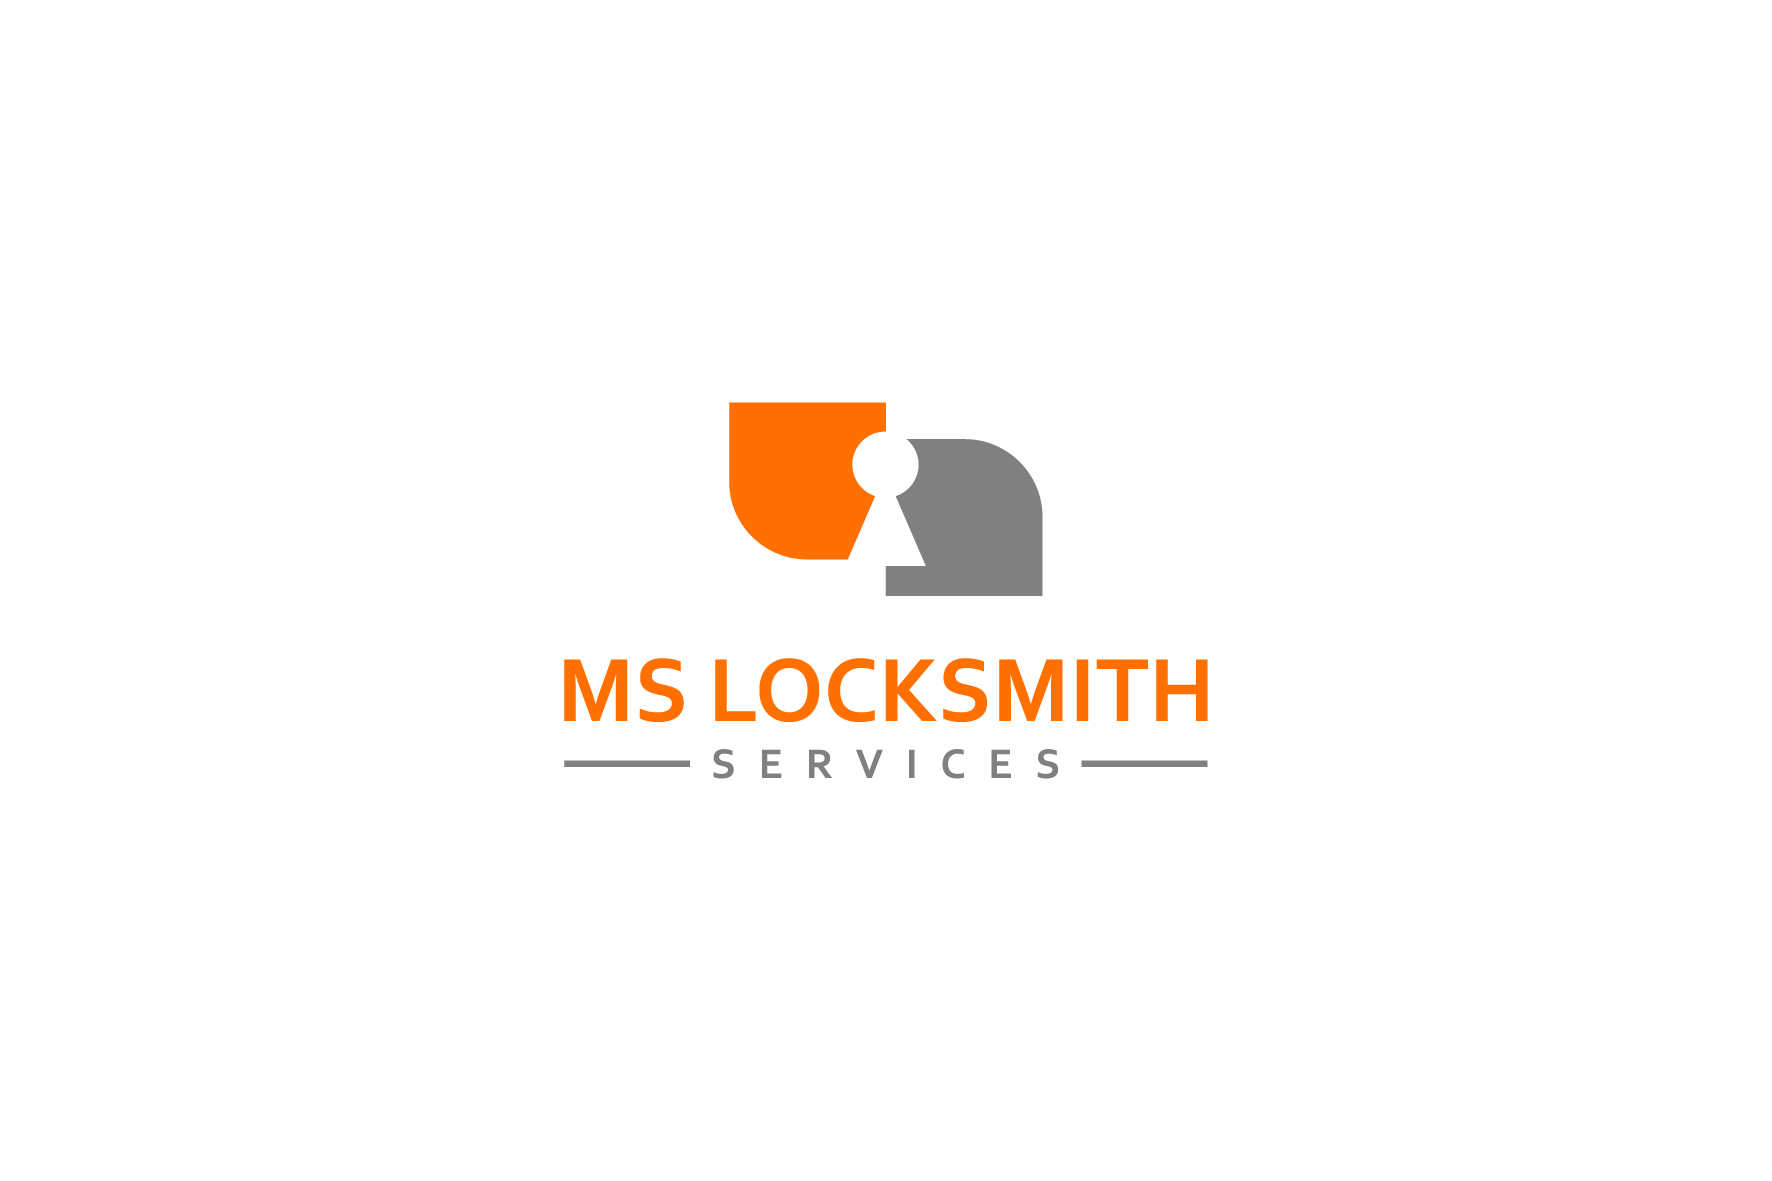 MS Locksmith Services Logo